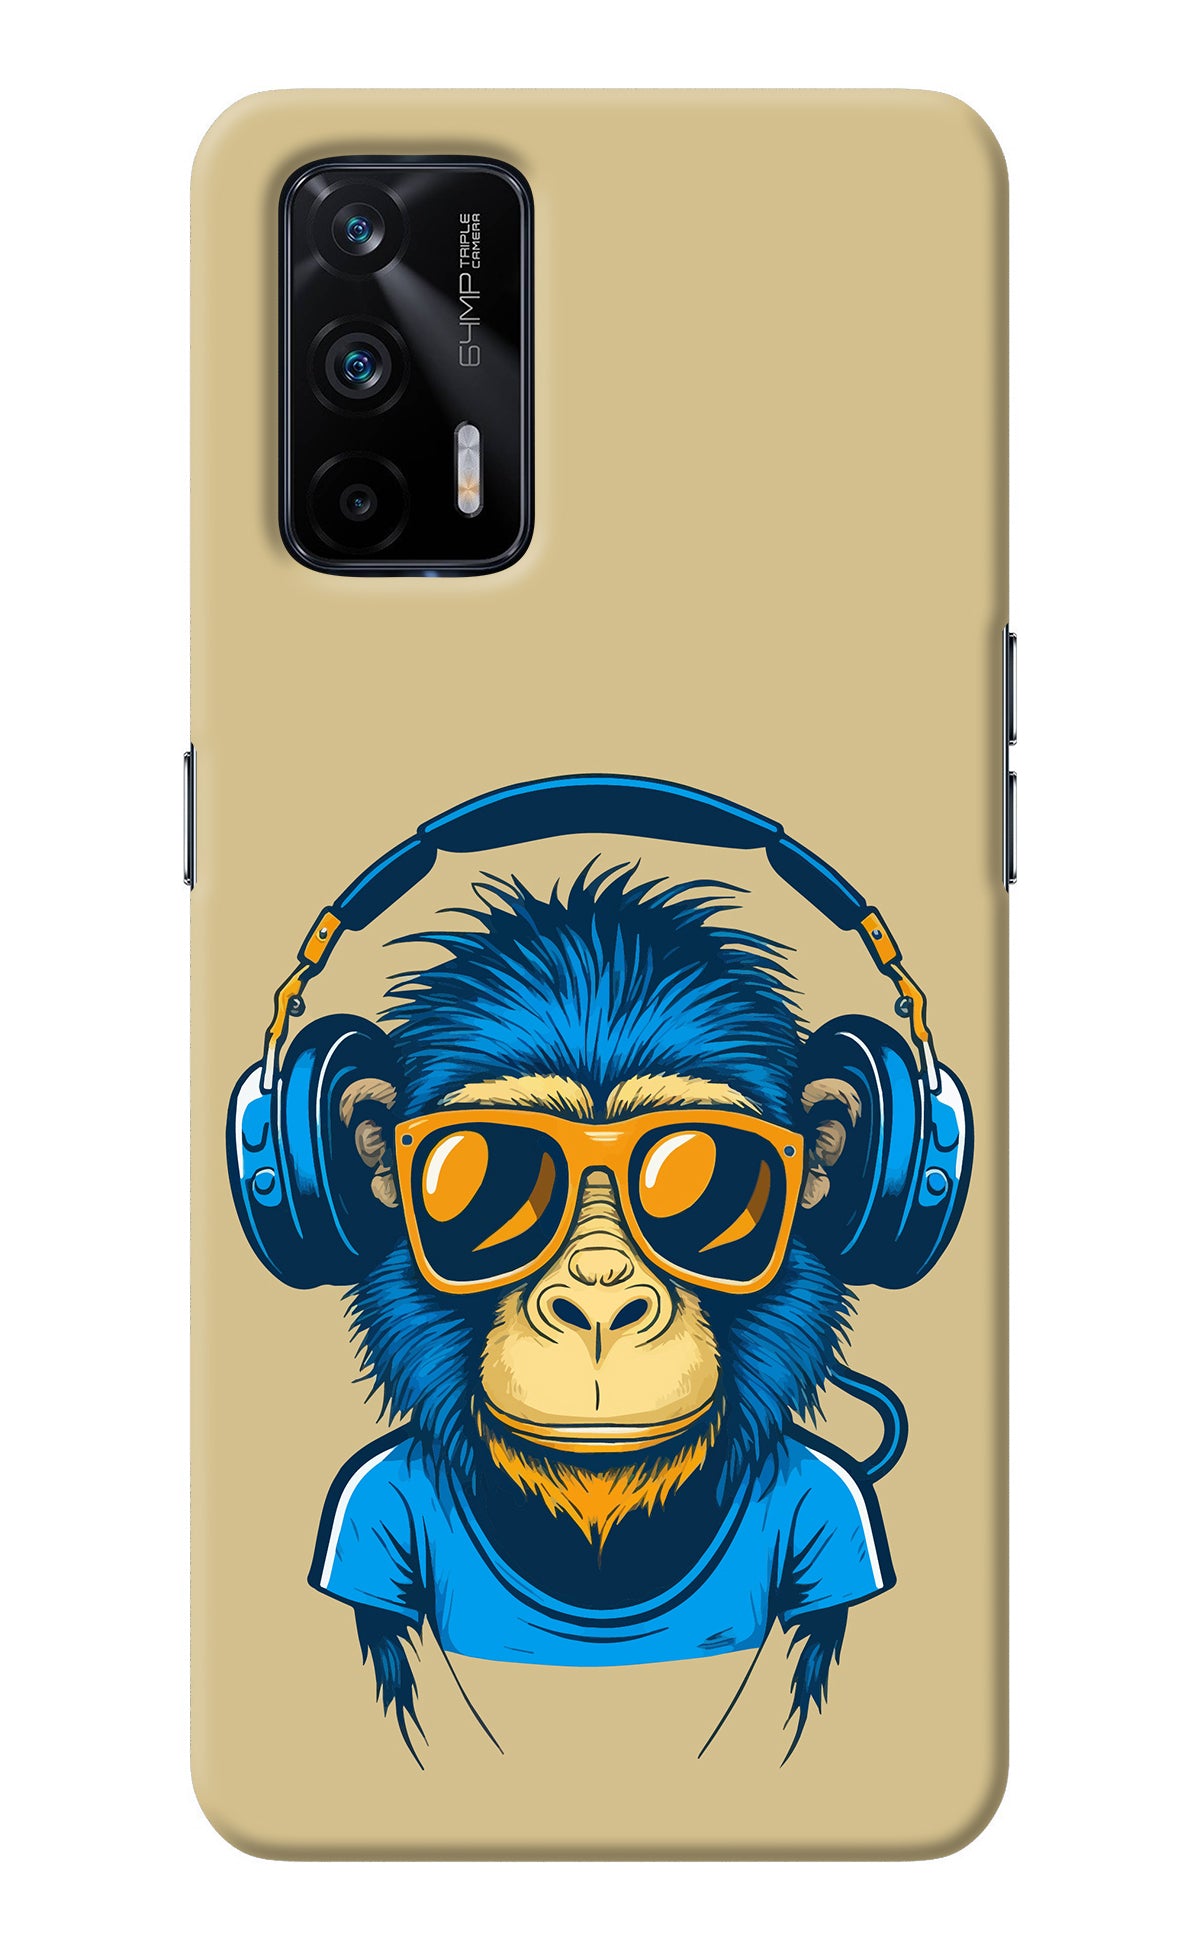 Monkey Headphone Realme X7 Max Back Cover